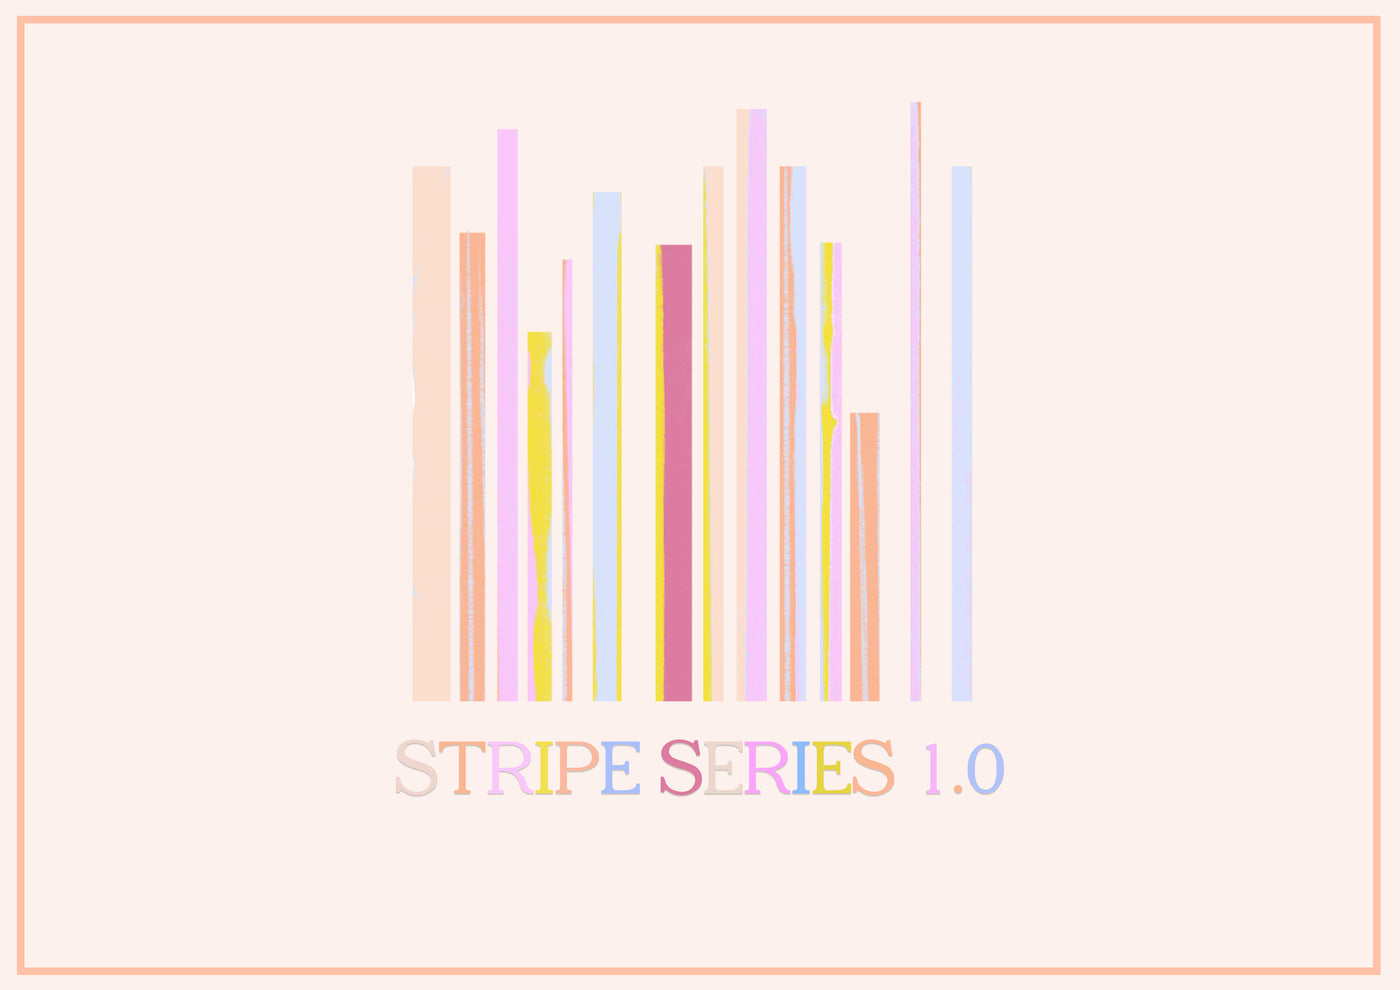 The Stripe Series 1.0